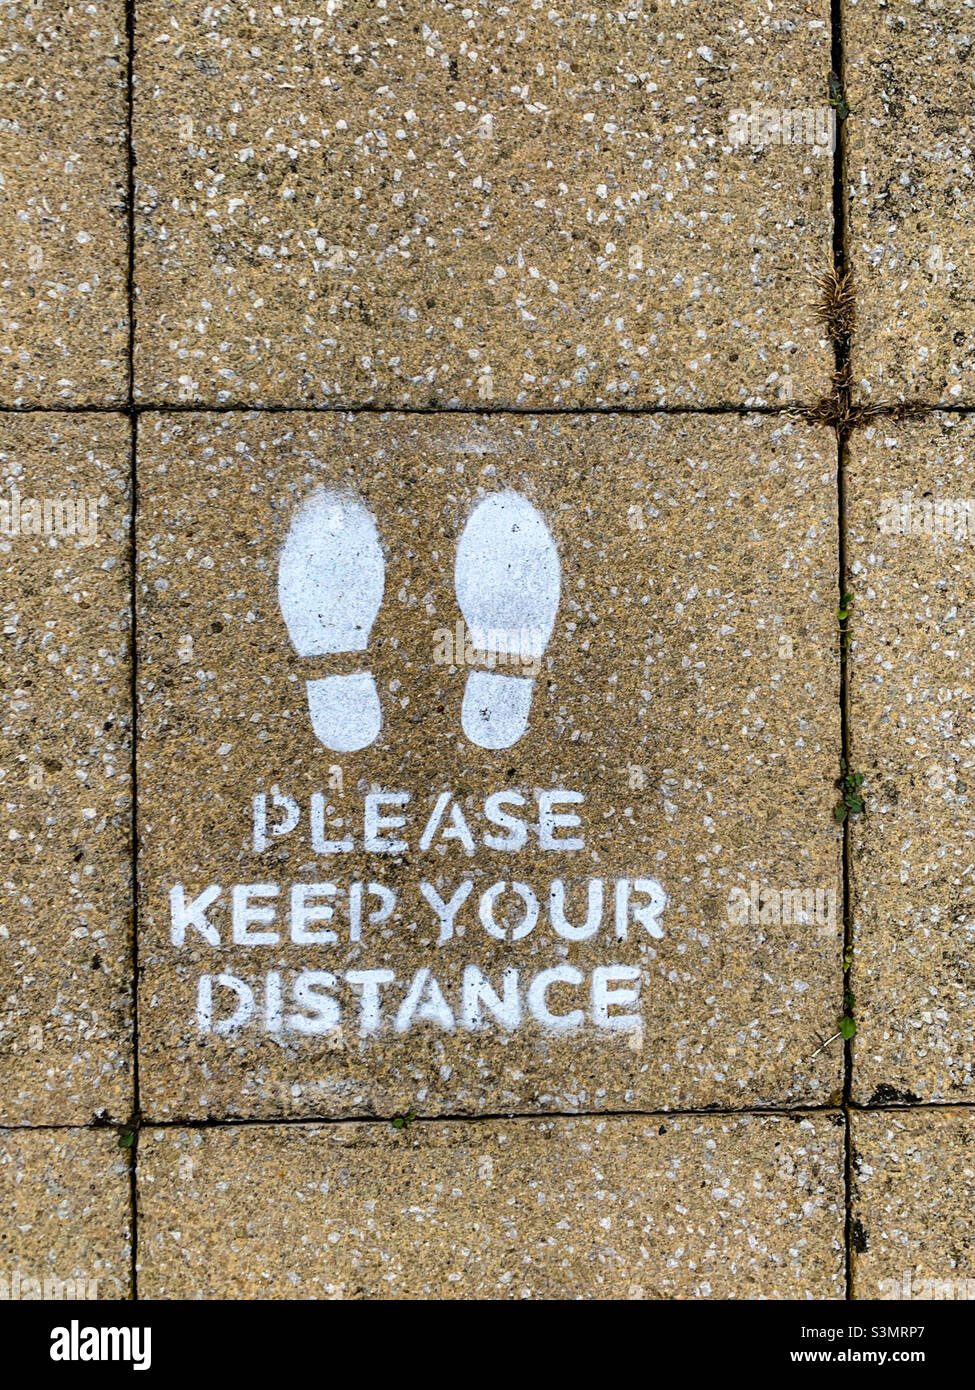 Please keep distance on pavement Stock Photo